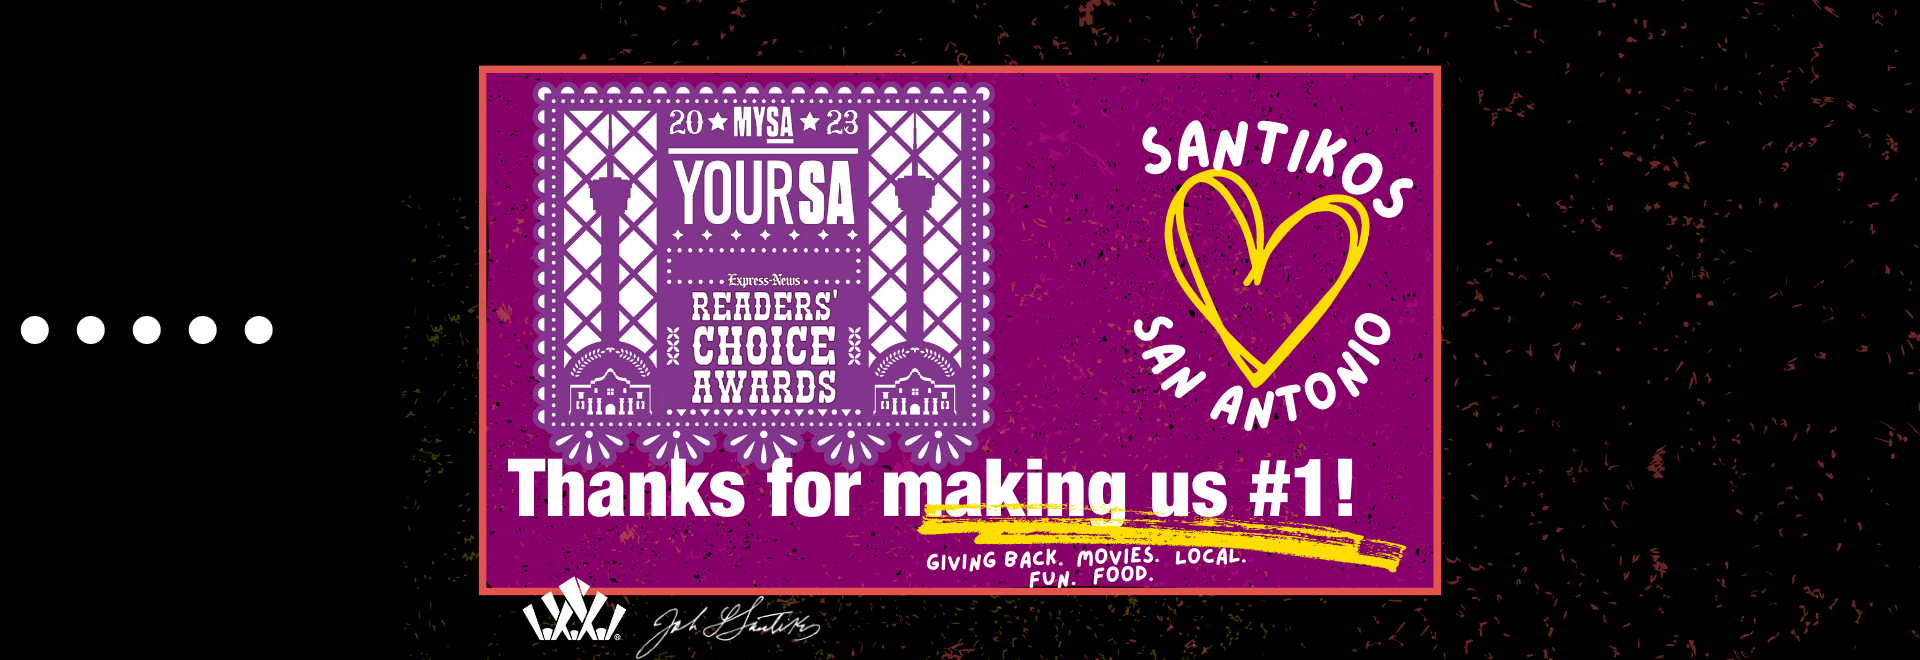 Thanks San Antonio for choosing Santikos Entertainment as the #1 Theater Chain in MYSA reader poll